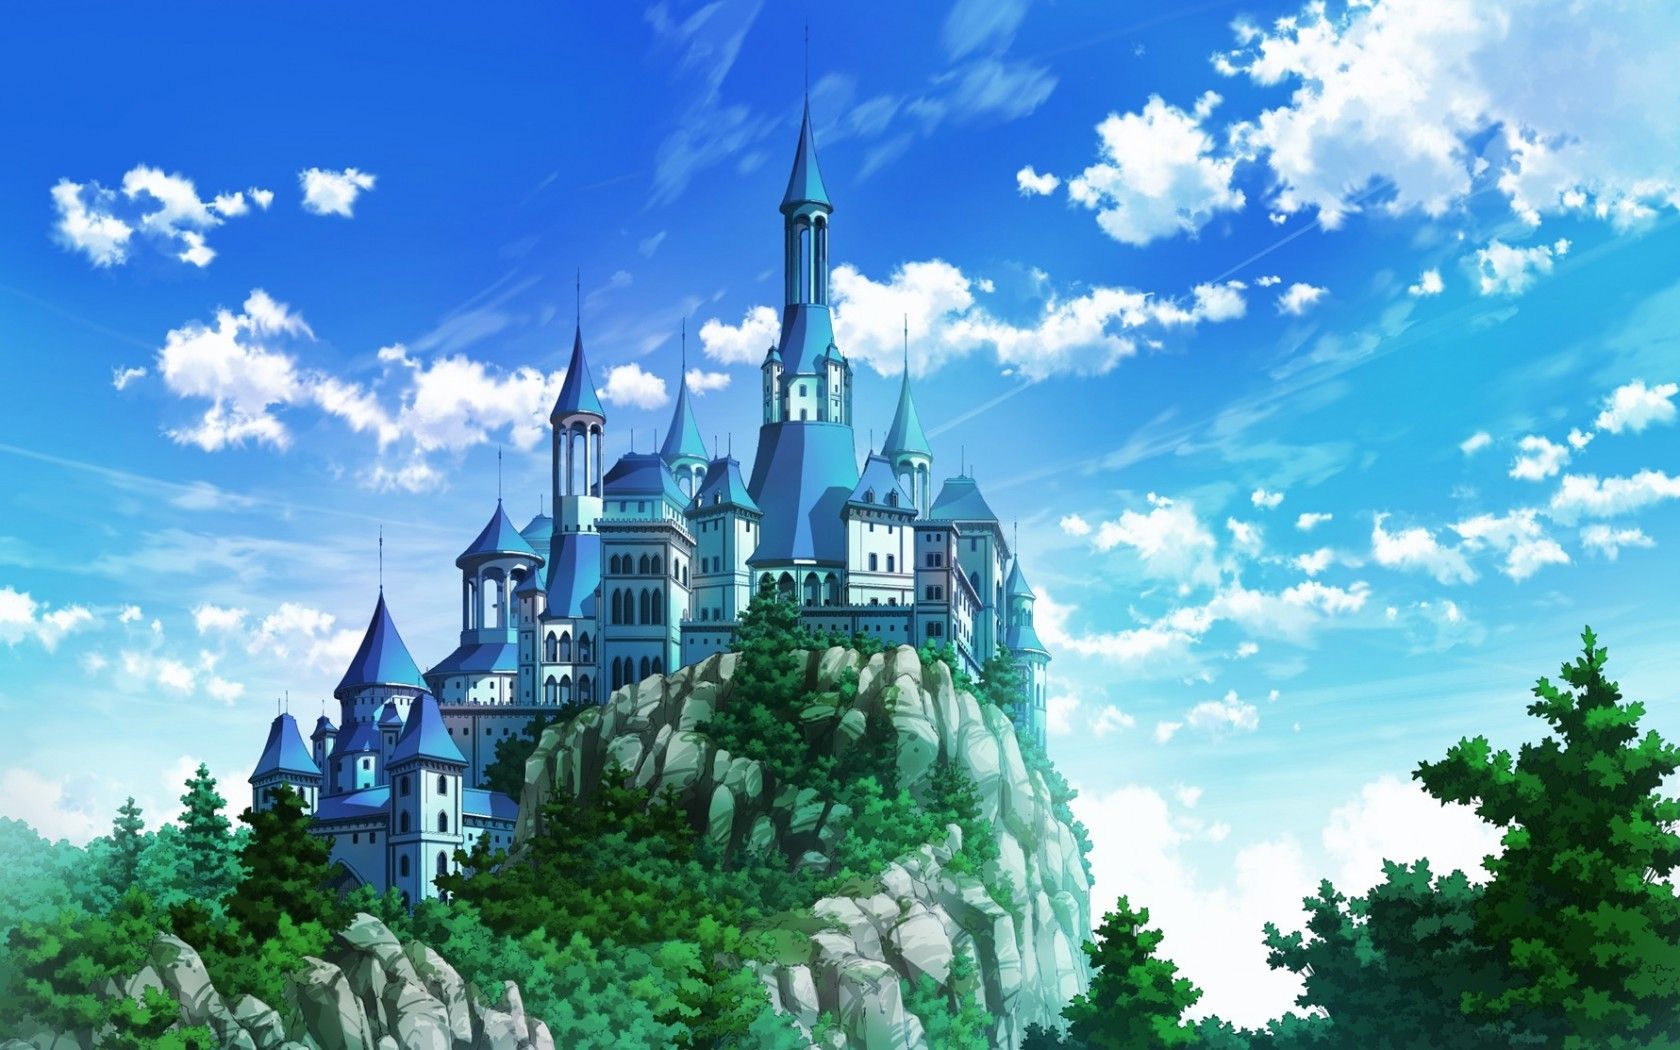 Castle - Other & Anime Background Wallpapers on Desktop Nexus (Image  2271670)